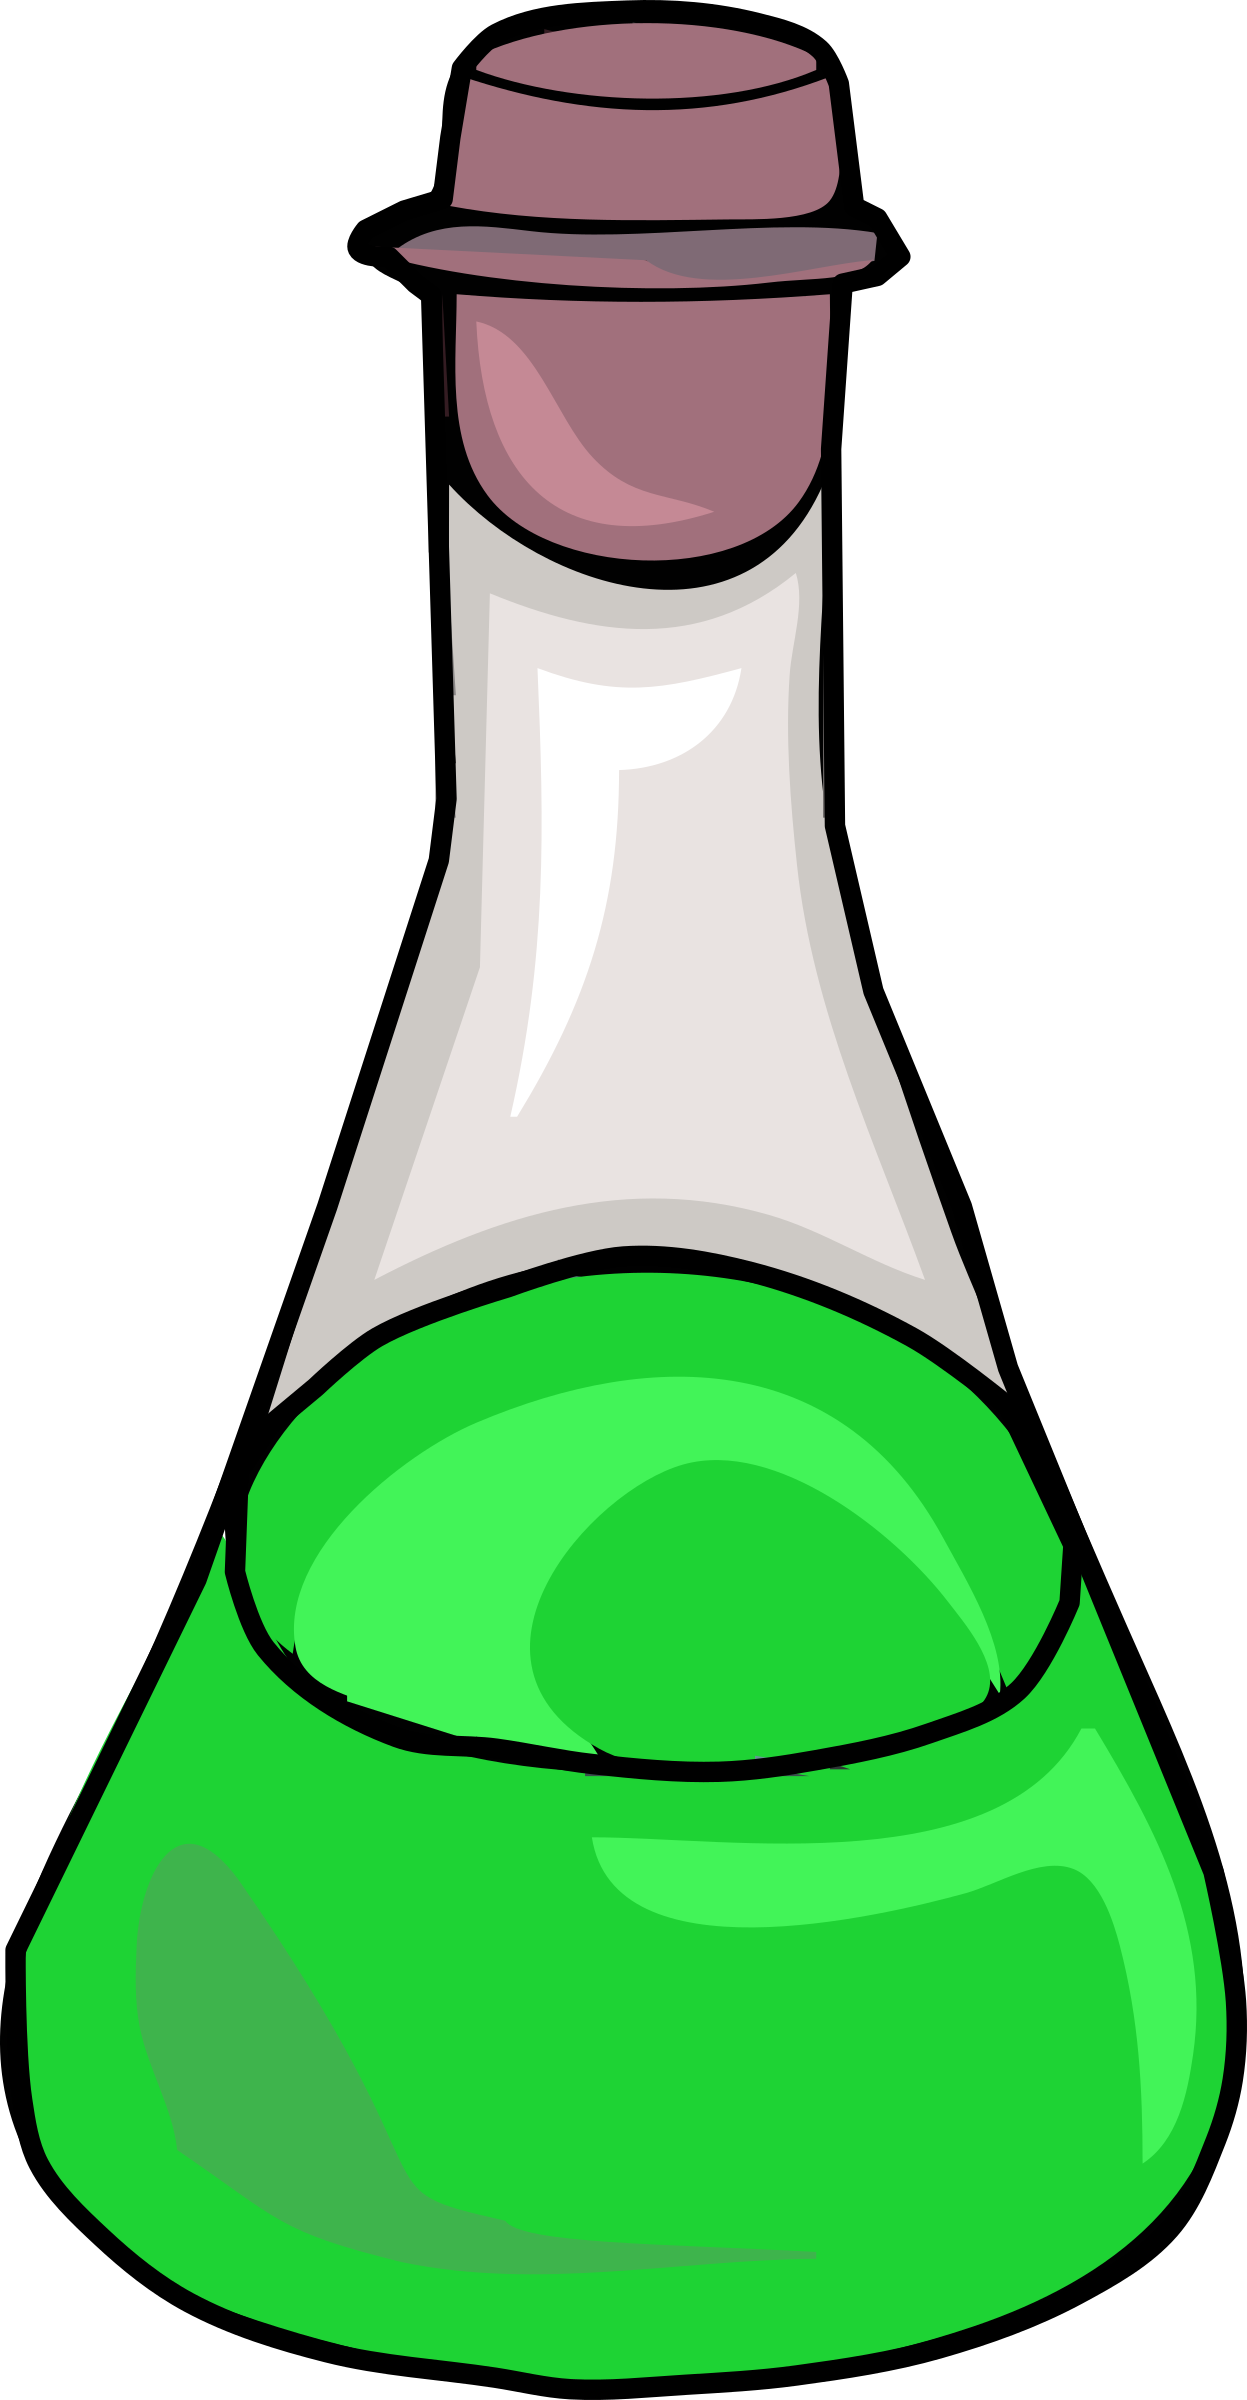 Green Science Bottle SVG Clip arts